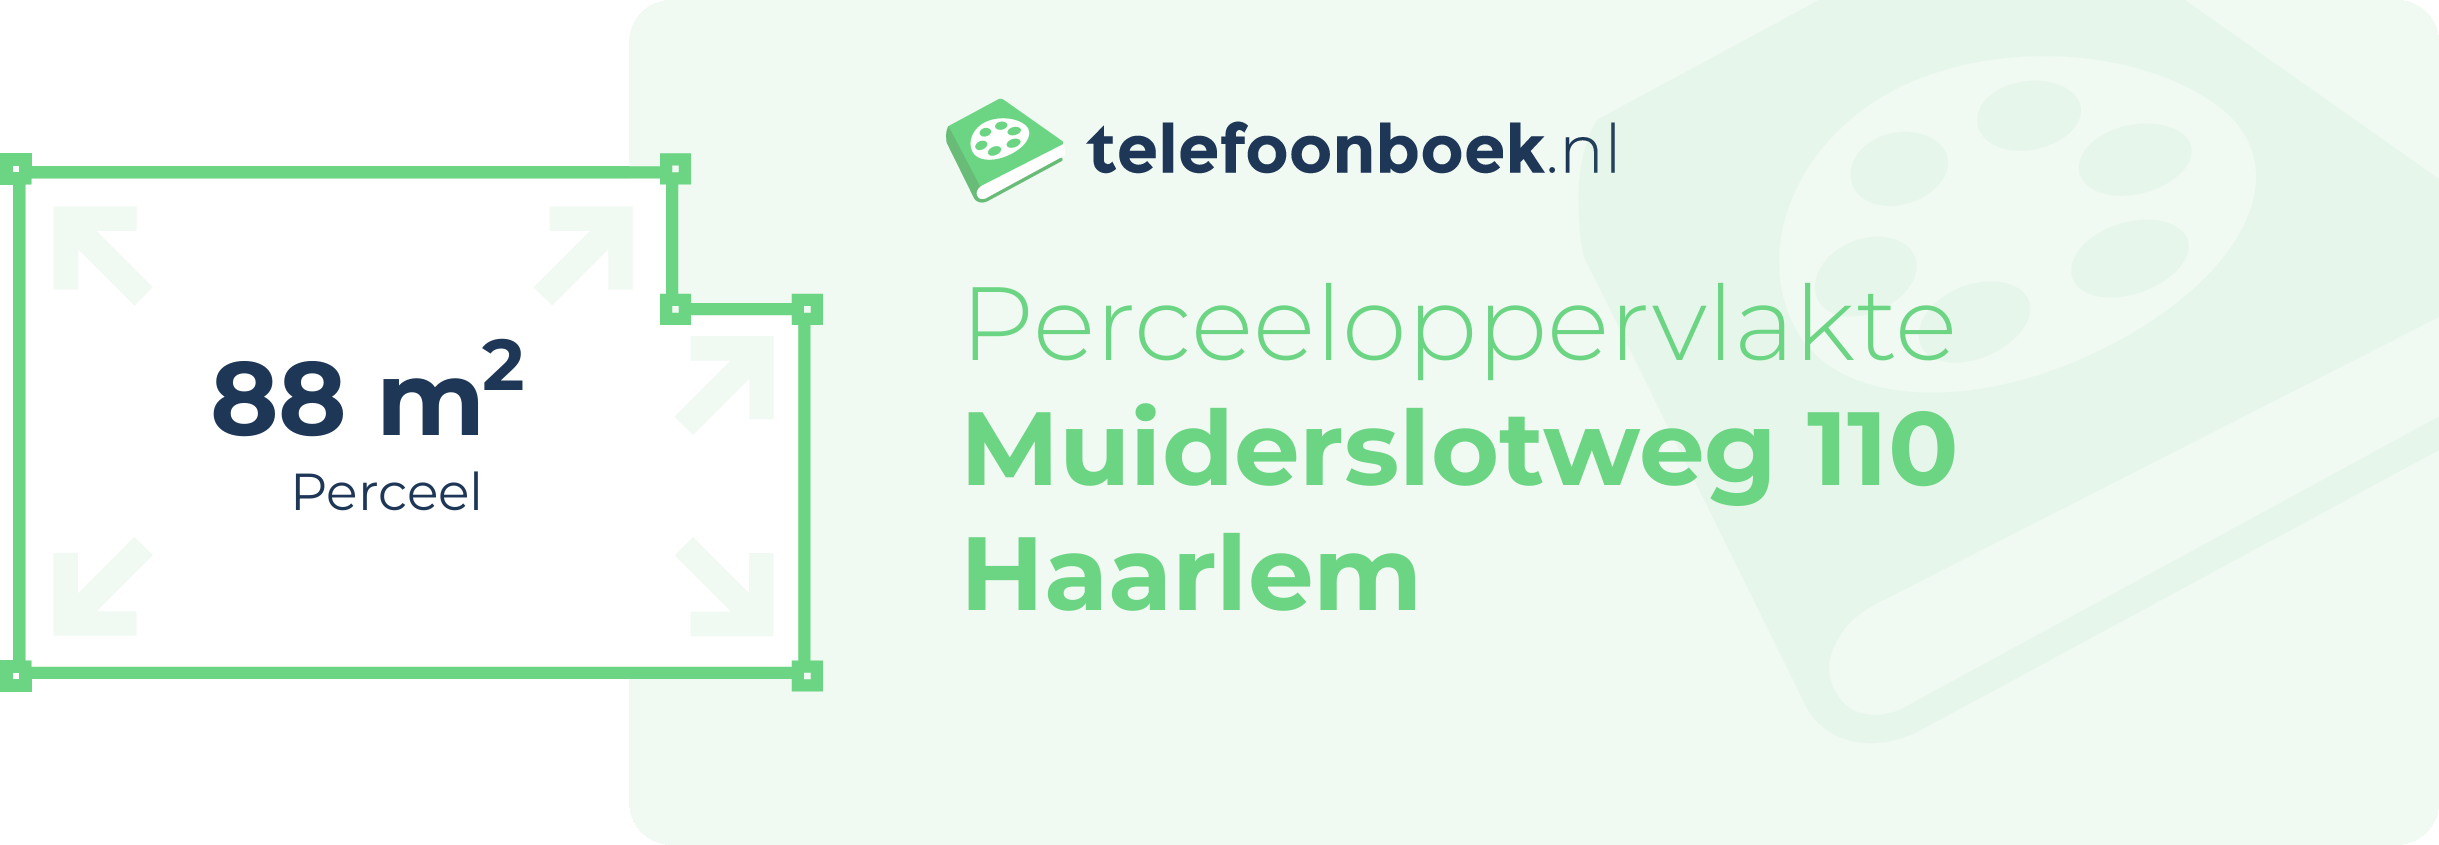 Perceeloppervlakte Muiderslotweg 110 Haarlem